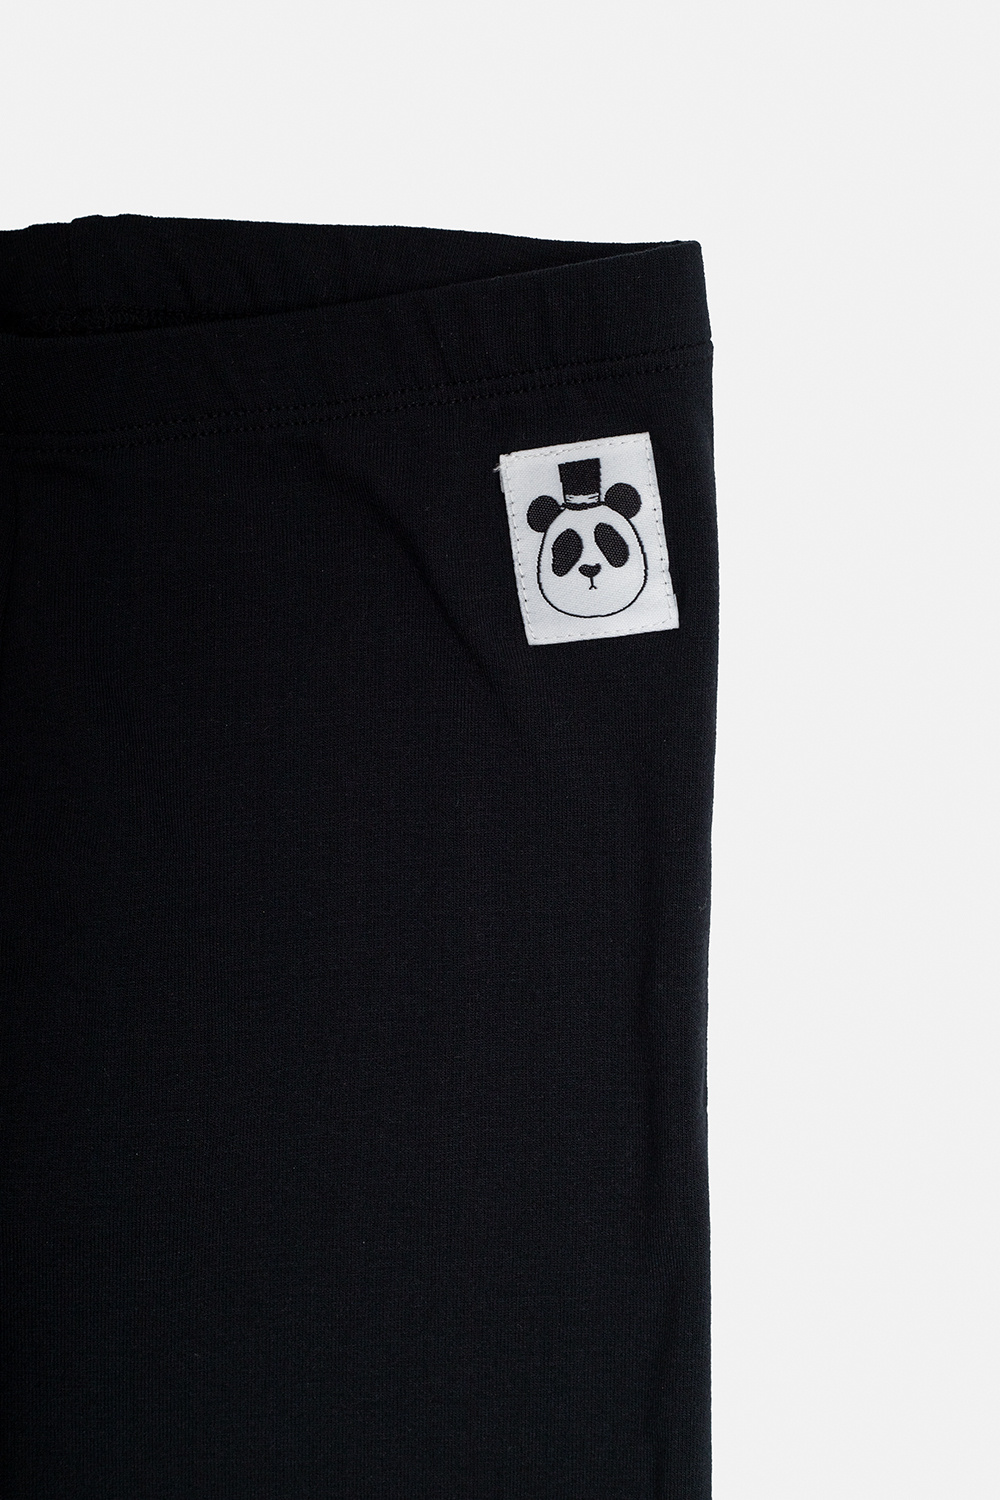 Mini Rodini Logo-patched leggings